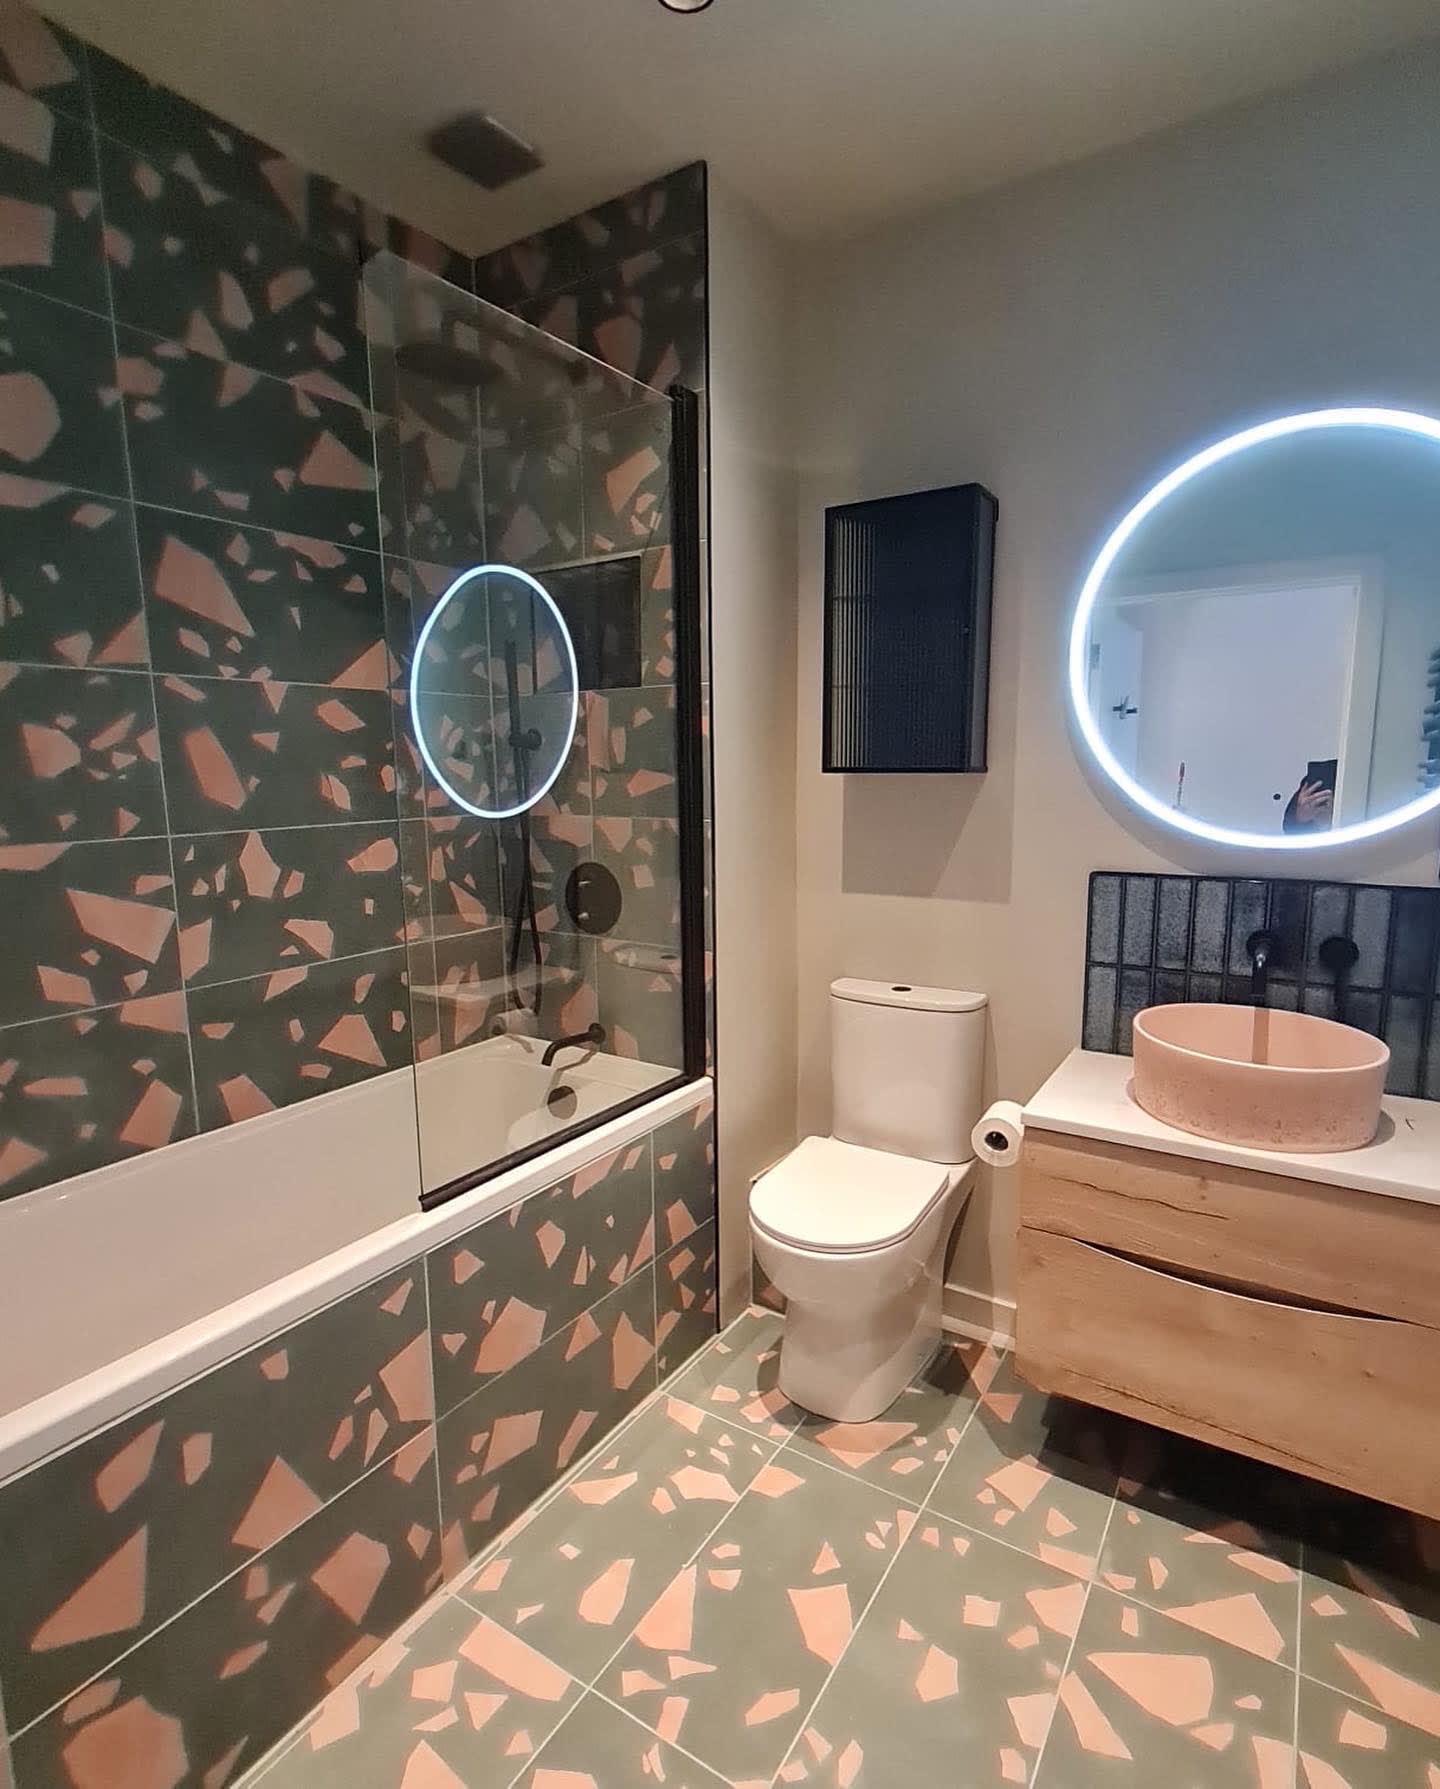 Images Simply Unique Bathrooms Ltd